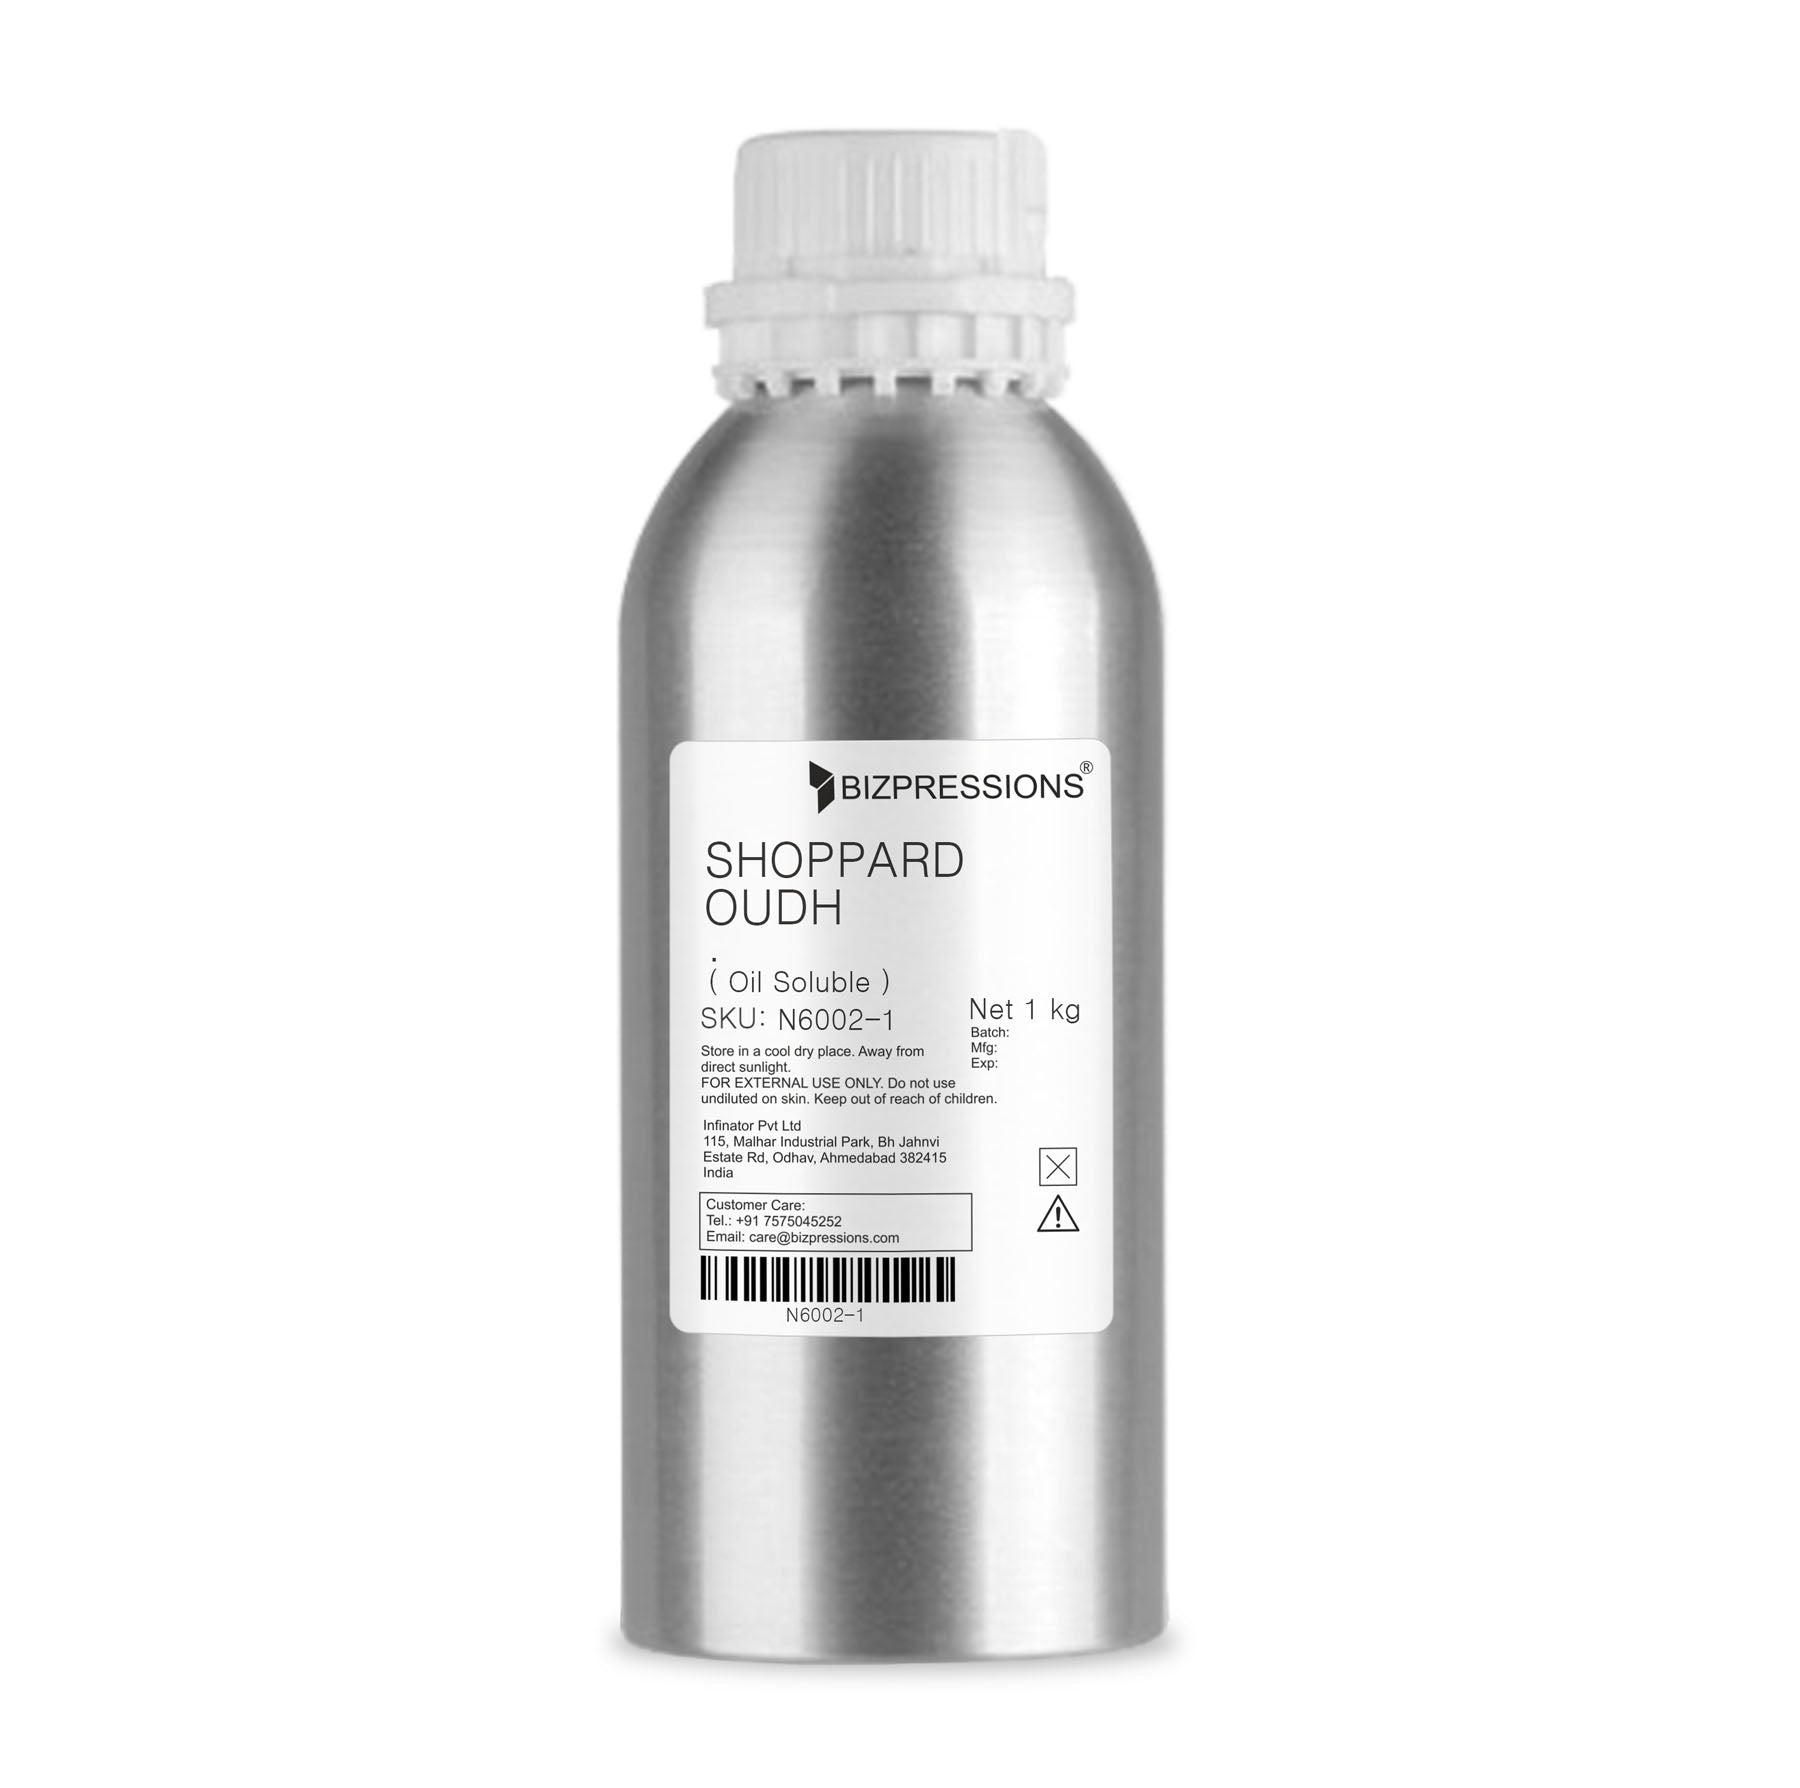 SHOPPARD OUDH - Fragrance ( Oil Soluble ) - 1 kg